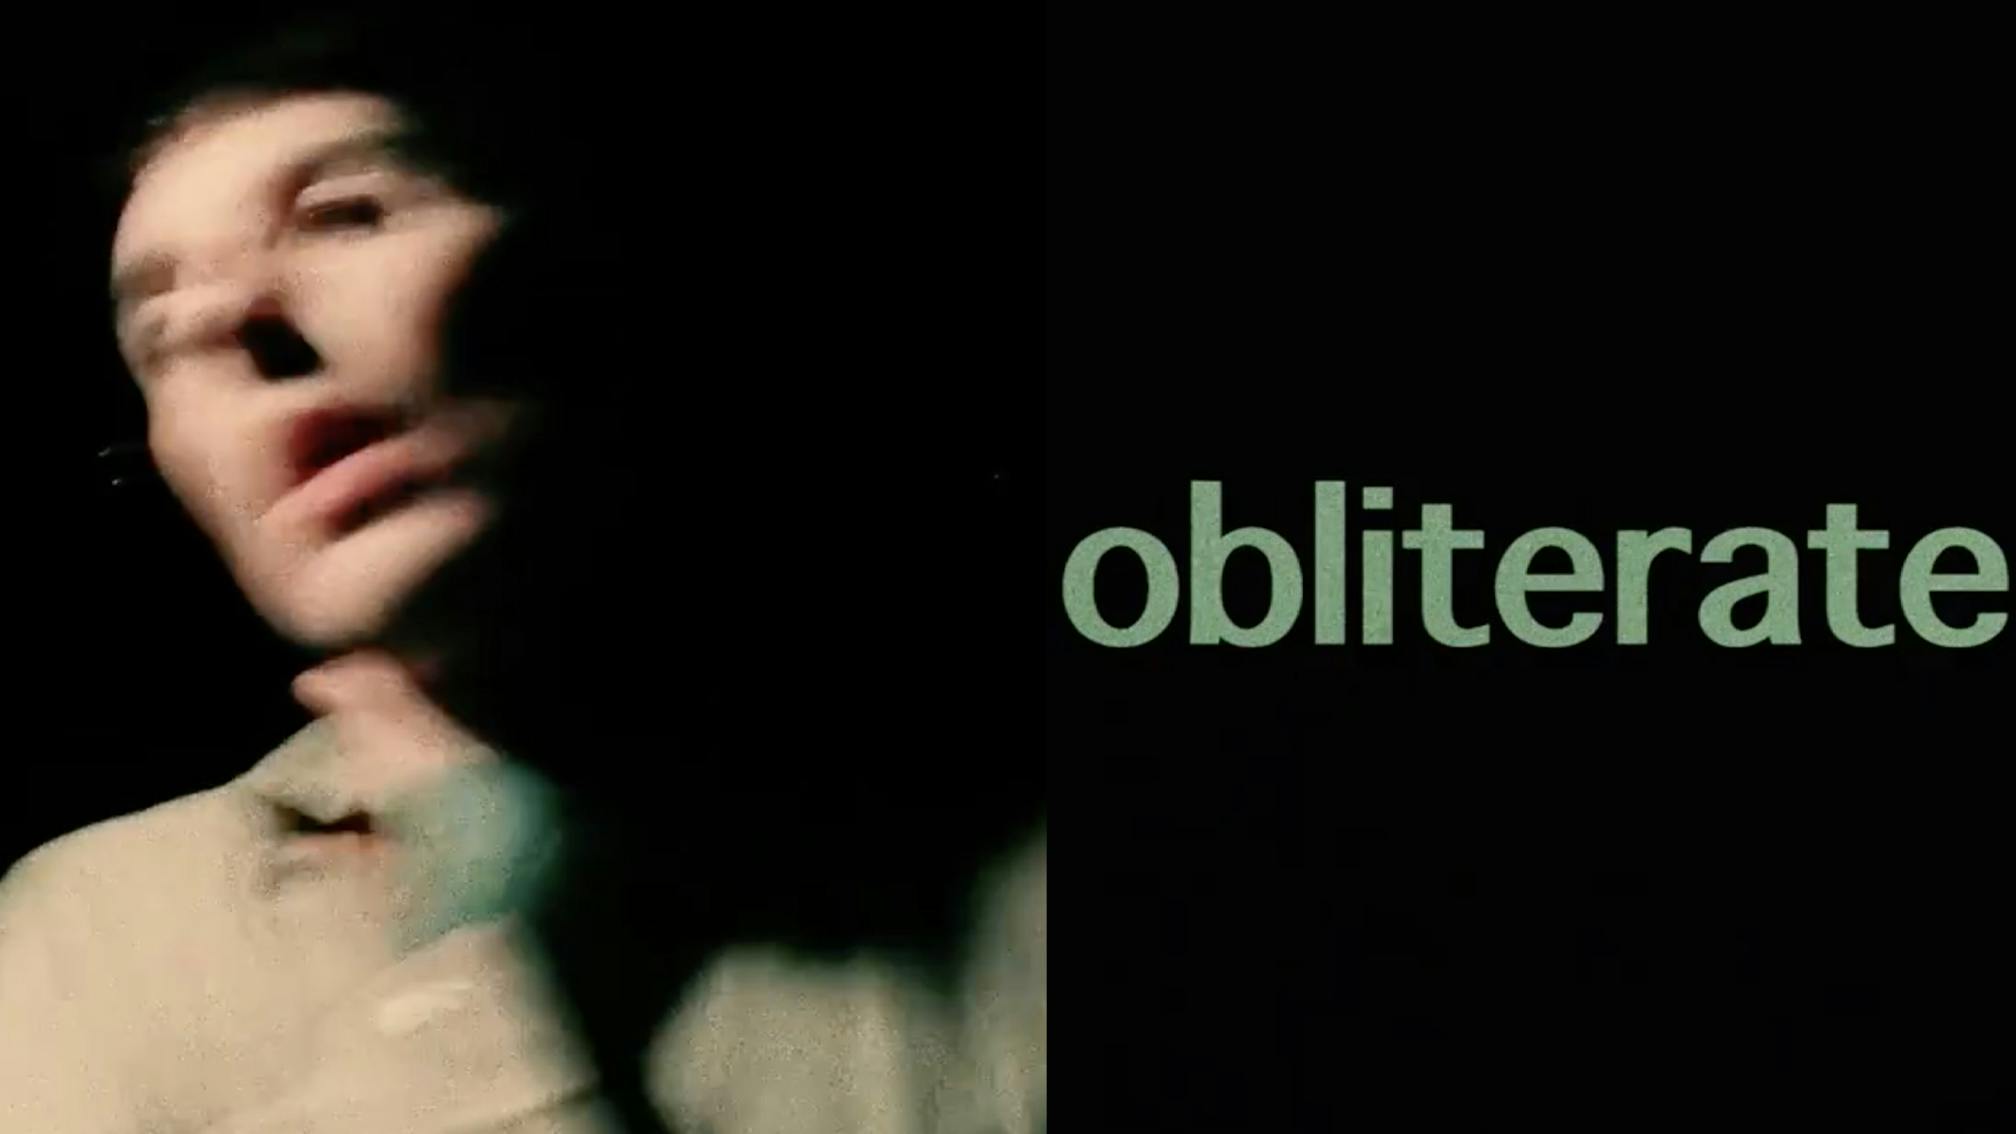 Lotus Eater tease new single Obliterate featuring Bring Me The Horizon's Oli Sykes